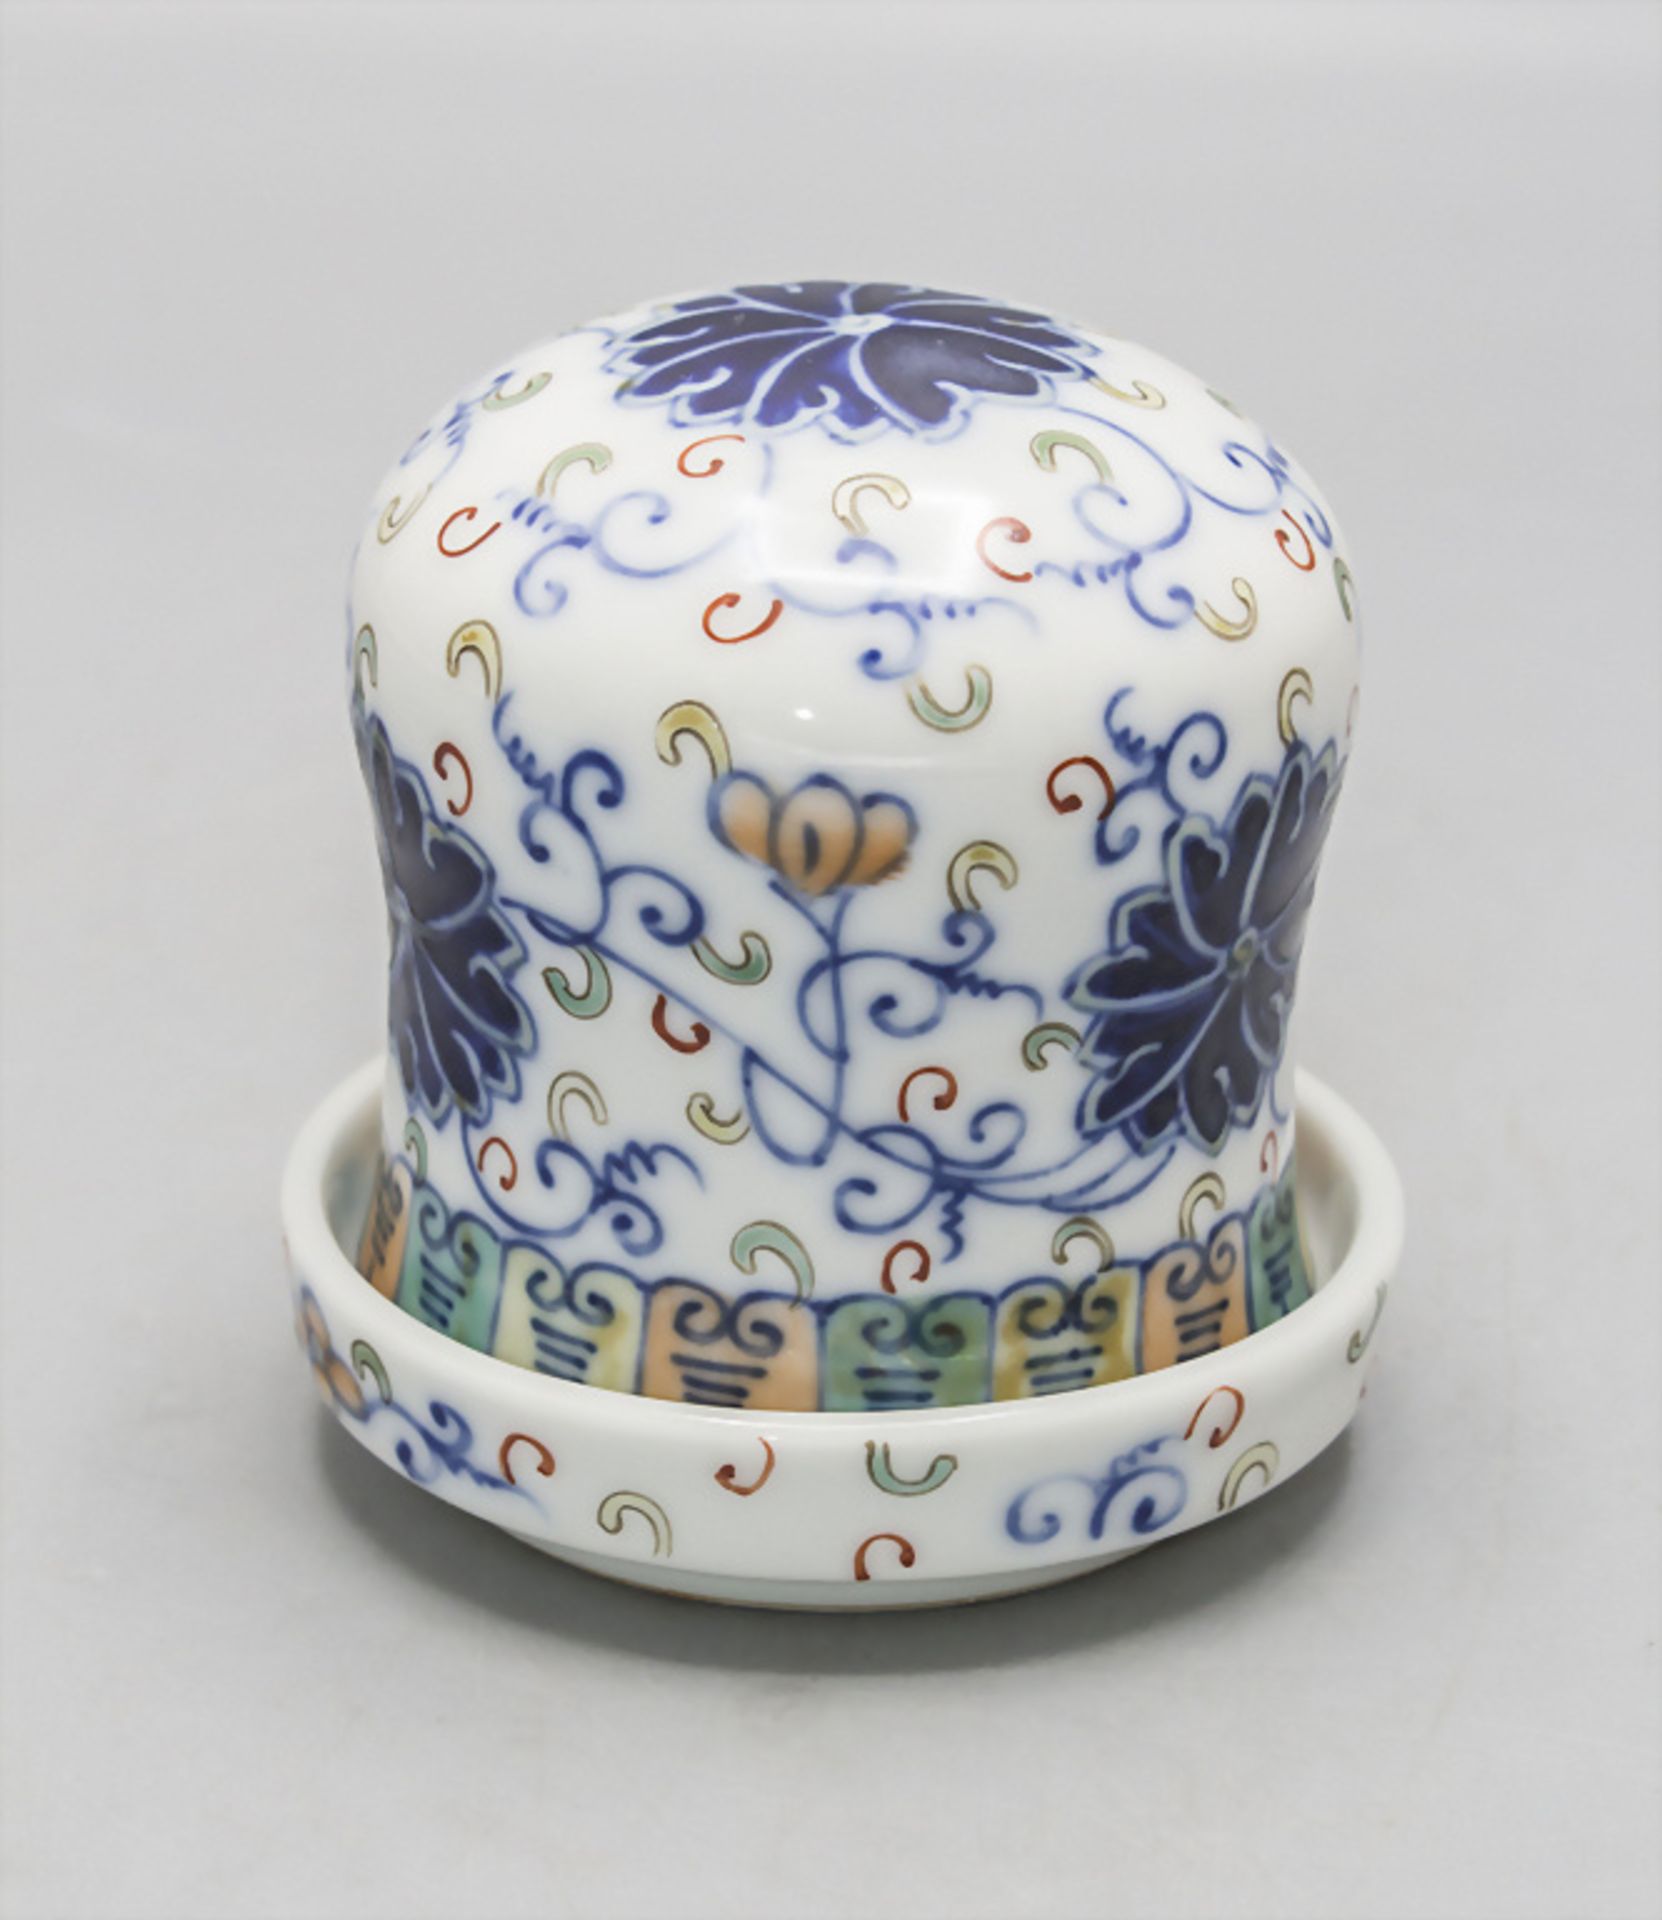 Seltene Doucai-Schröpfglocke mit Unterteller / A rare Doucai cupping bell with saucer, China ... - Image 2 of 4